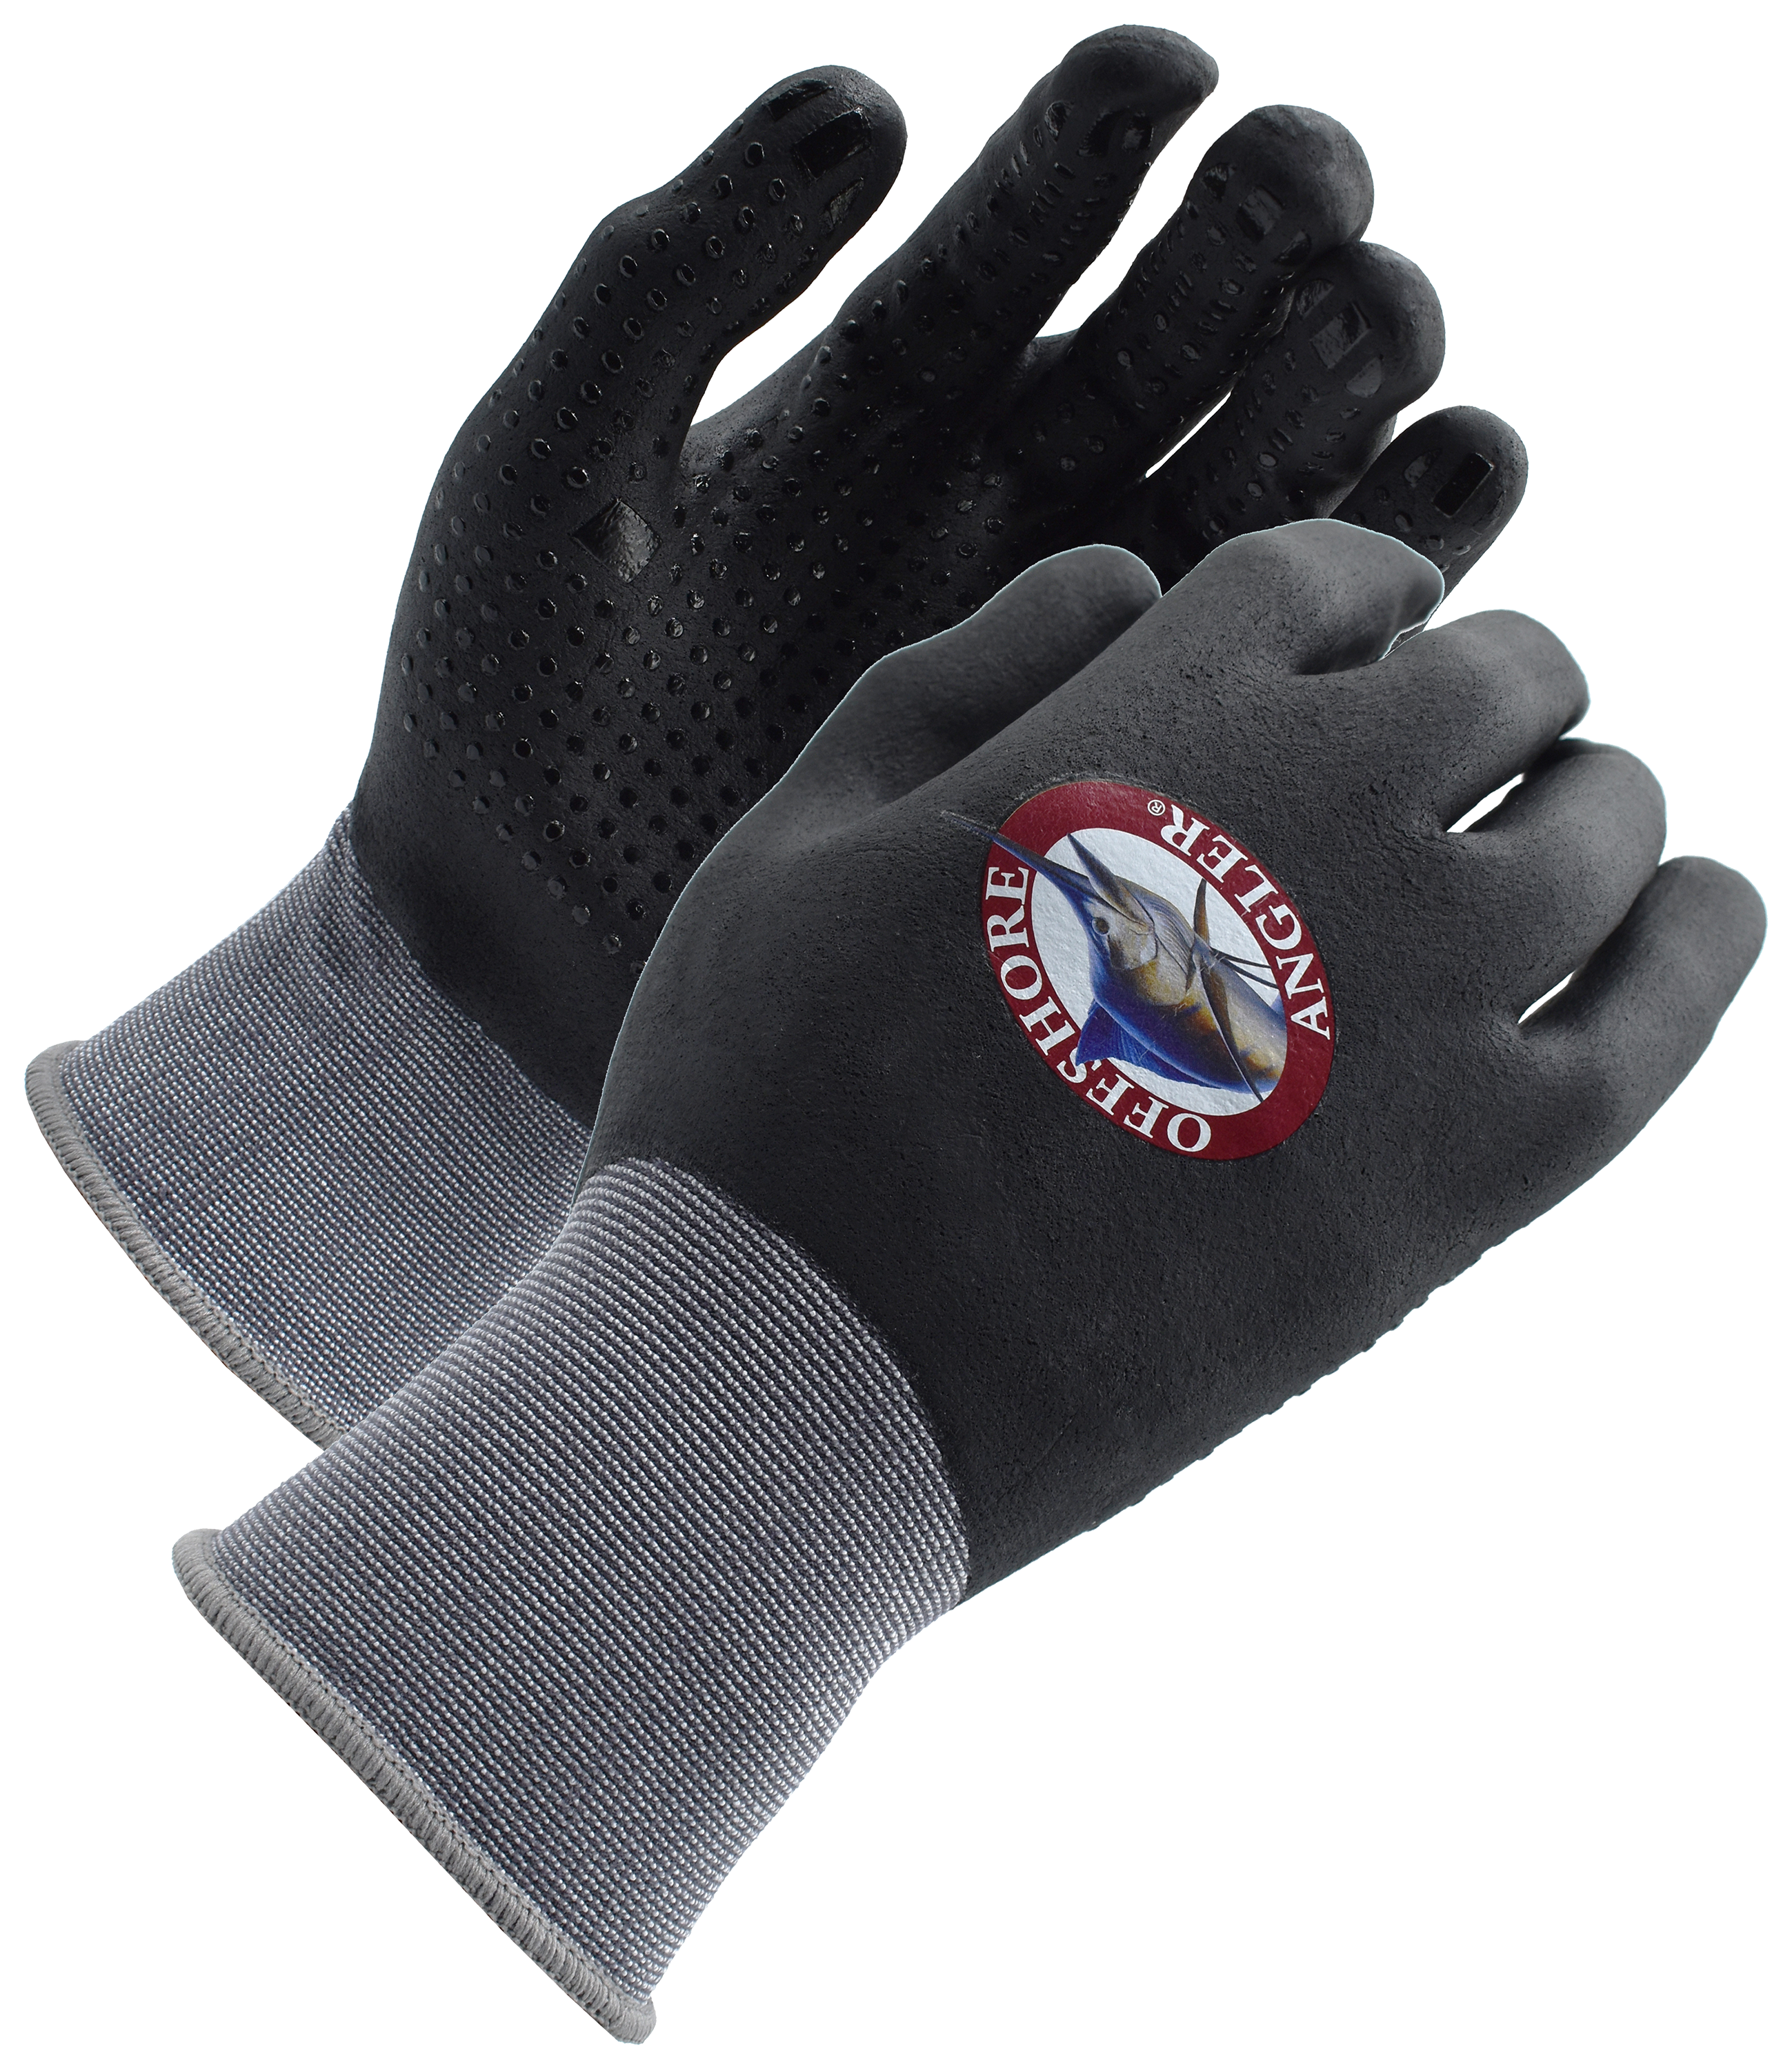 Offshore Angler Nitrile/PU Coated Gloves for Men